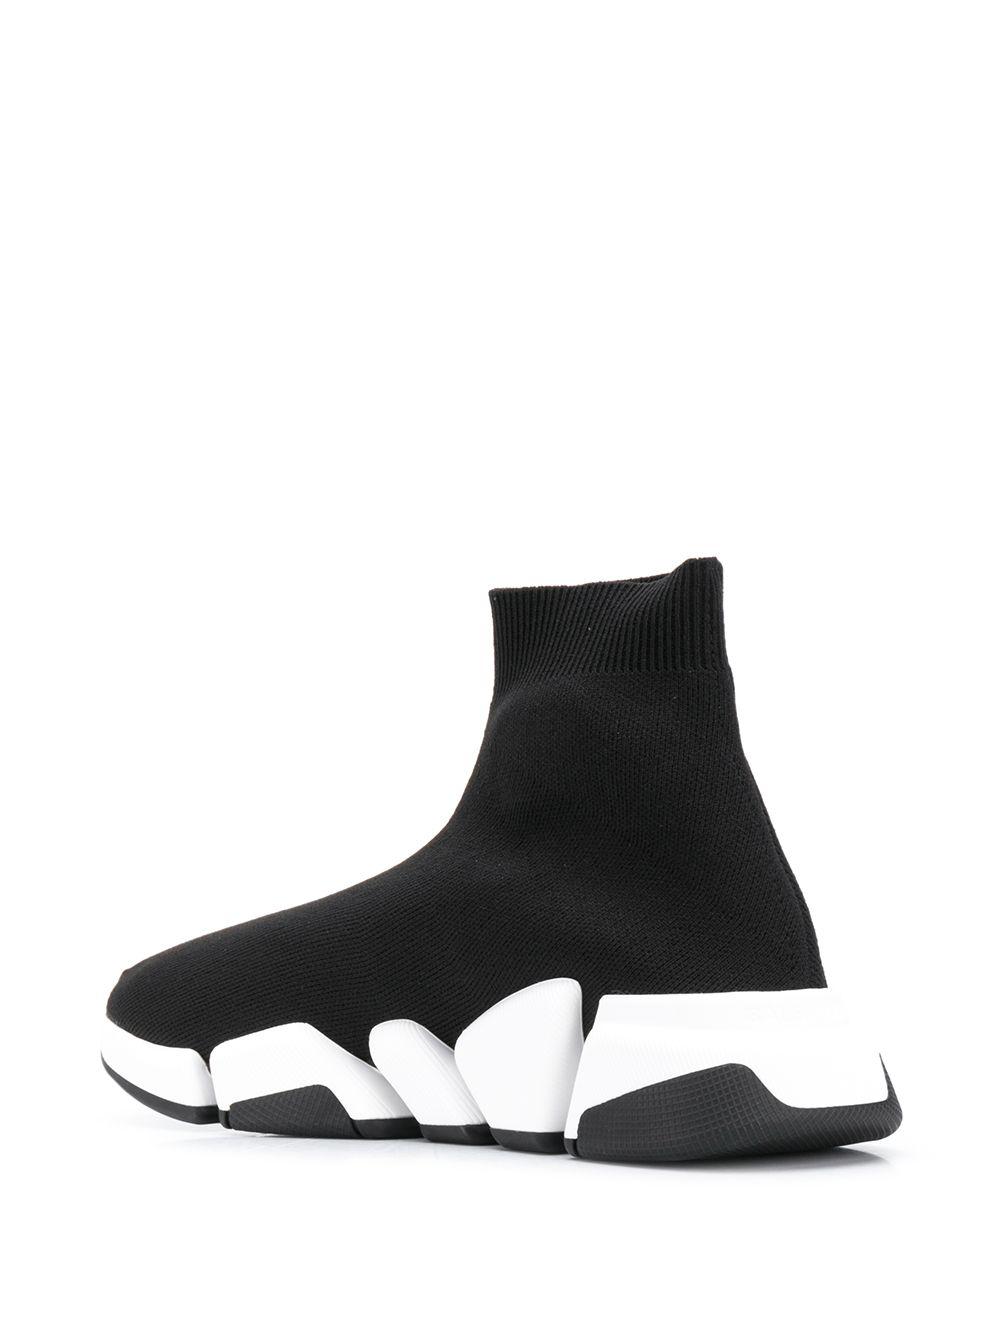 Balenciaga Speed.2 Sock-style Sneakers in Black - Lyst